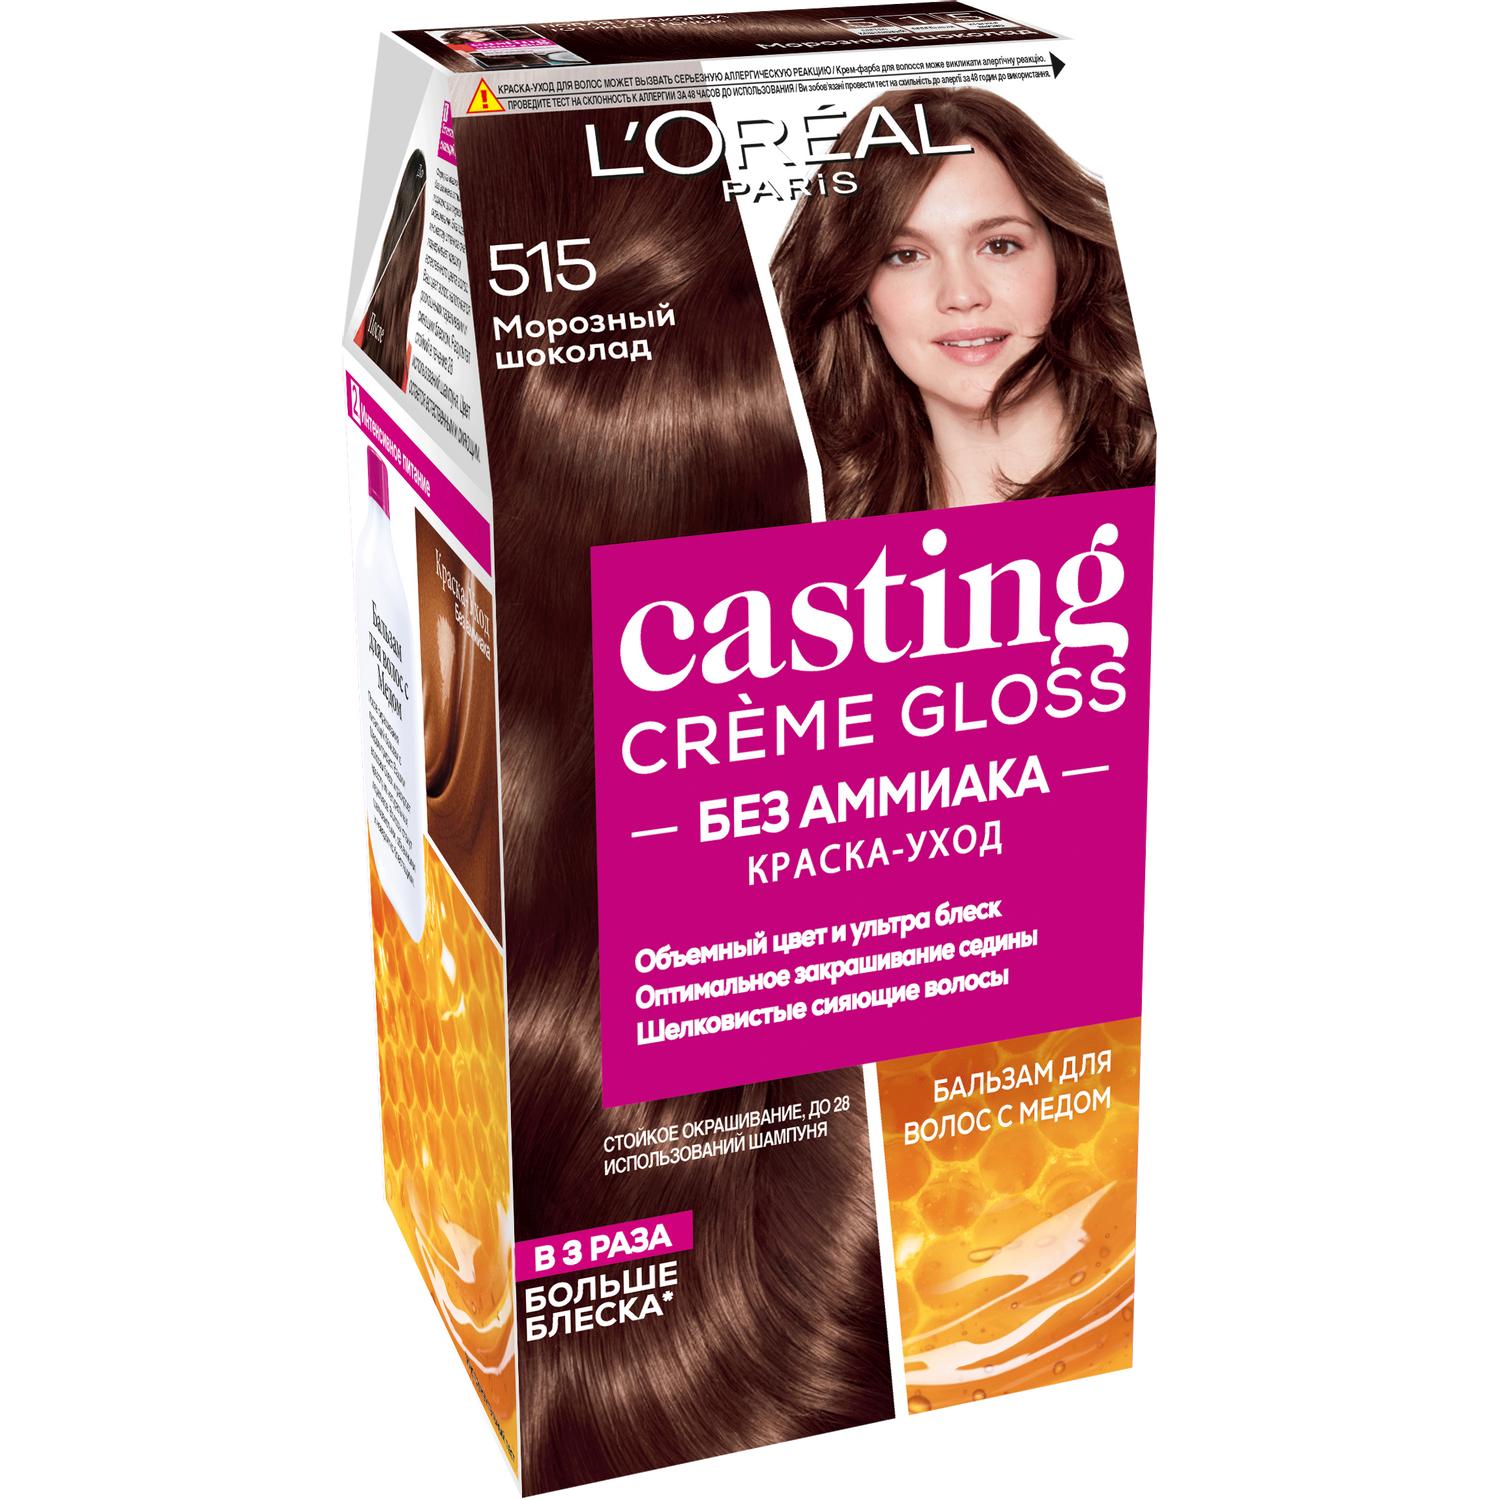 Краска L’Oreal Casting Creme Gloss 515 254 мл Морозный шоколад (A3170704) крем краска для волос аммиачная 3 16 холодный темный шатен